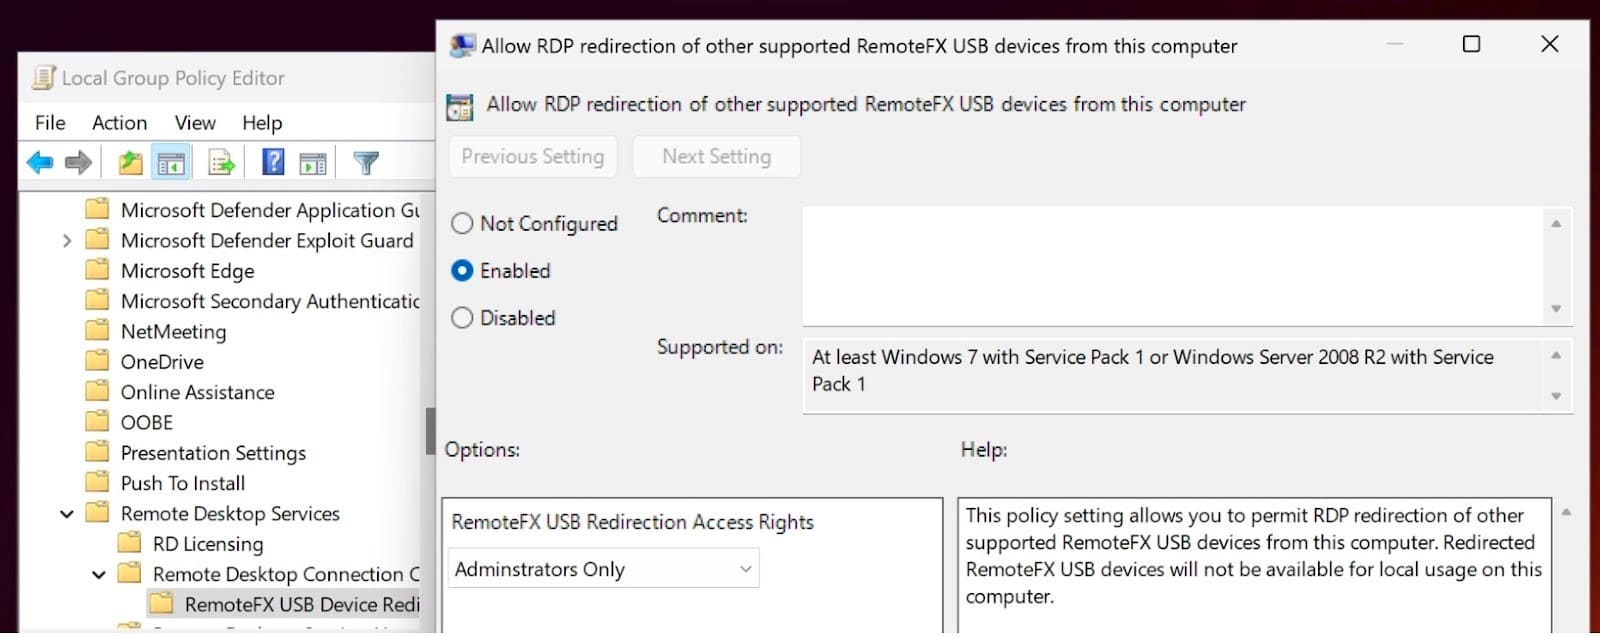  Os sistemas RemoteFX USB permitem